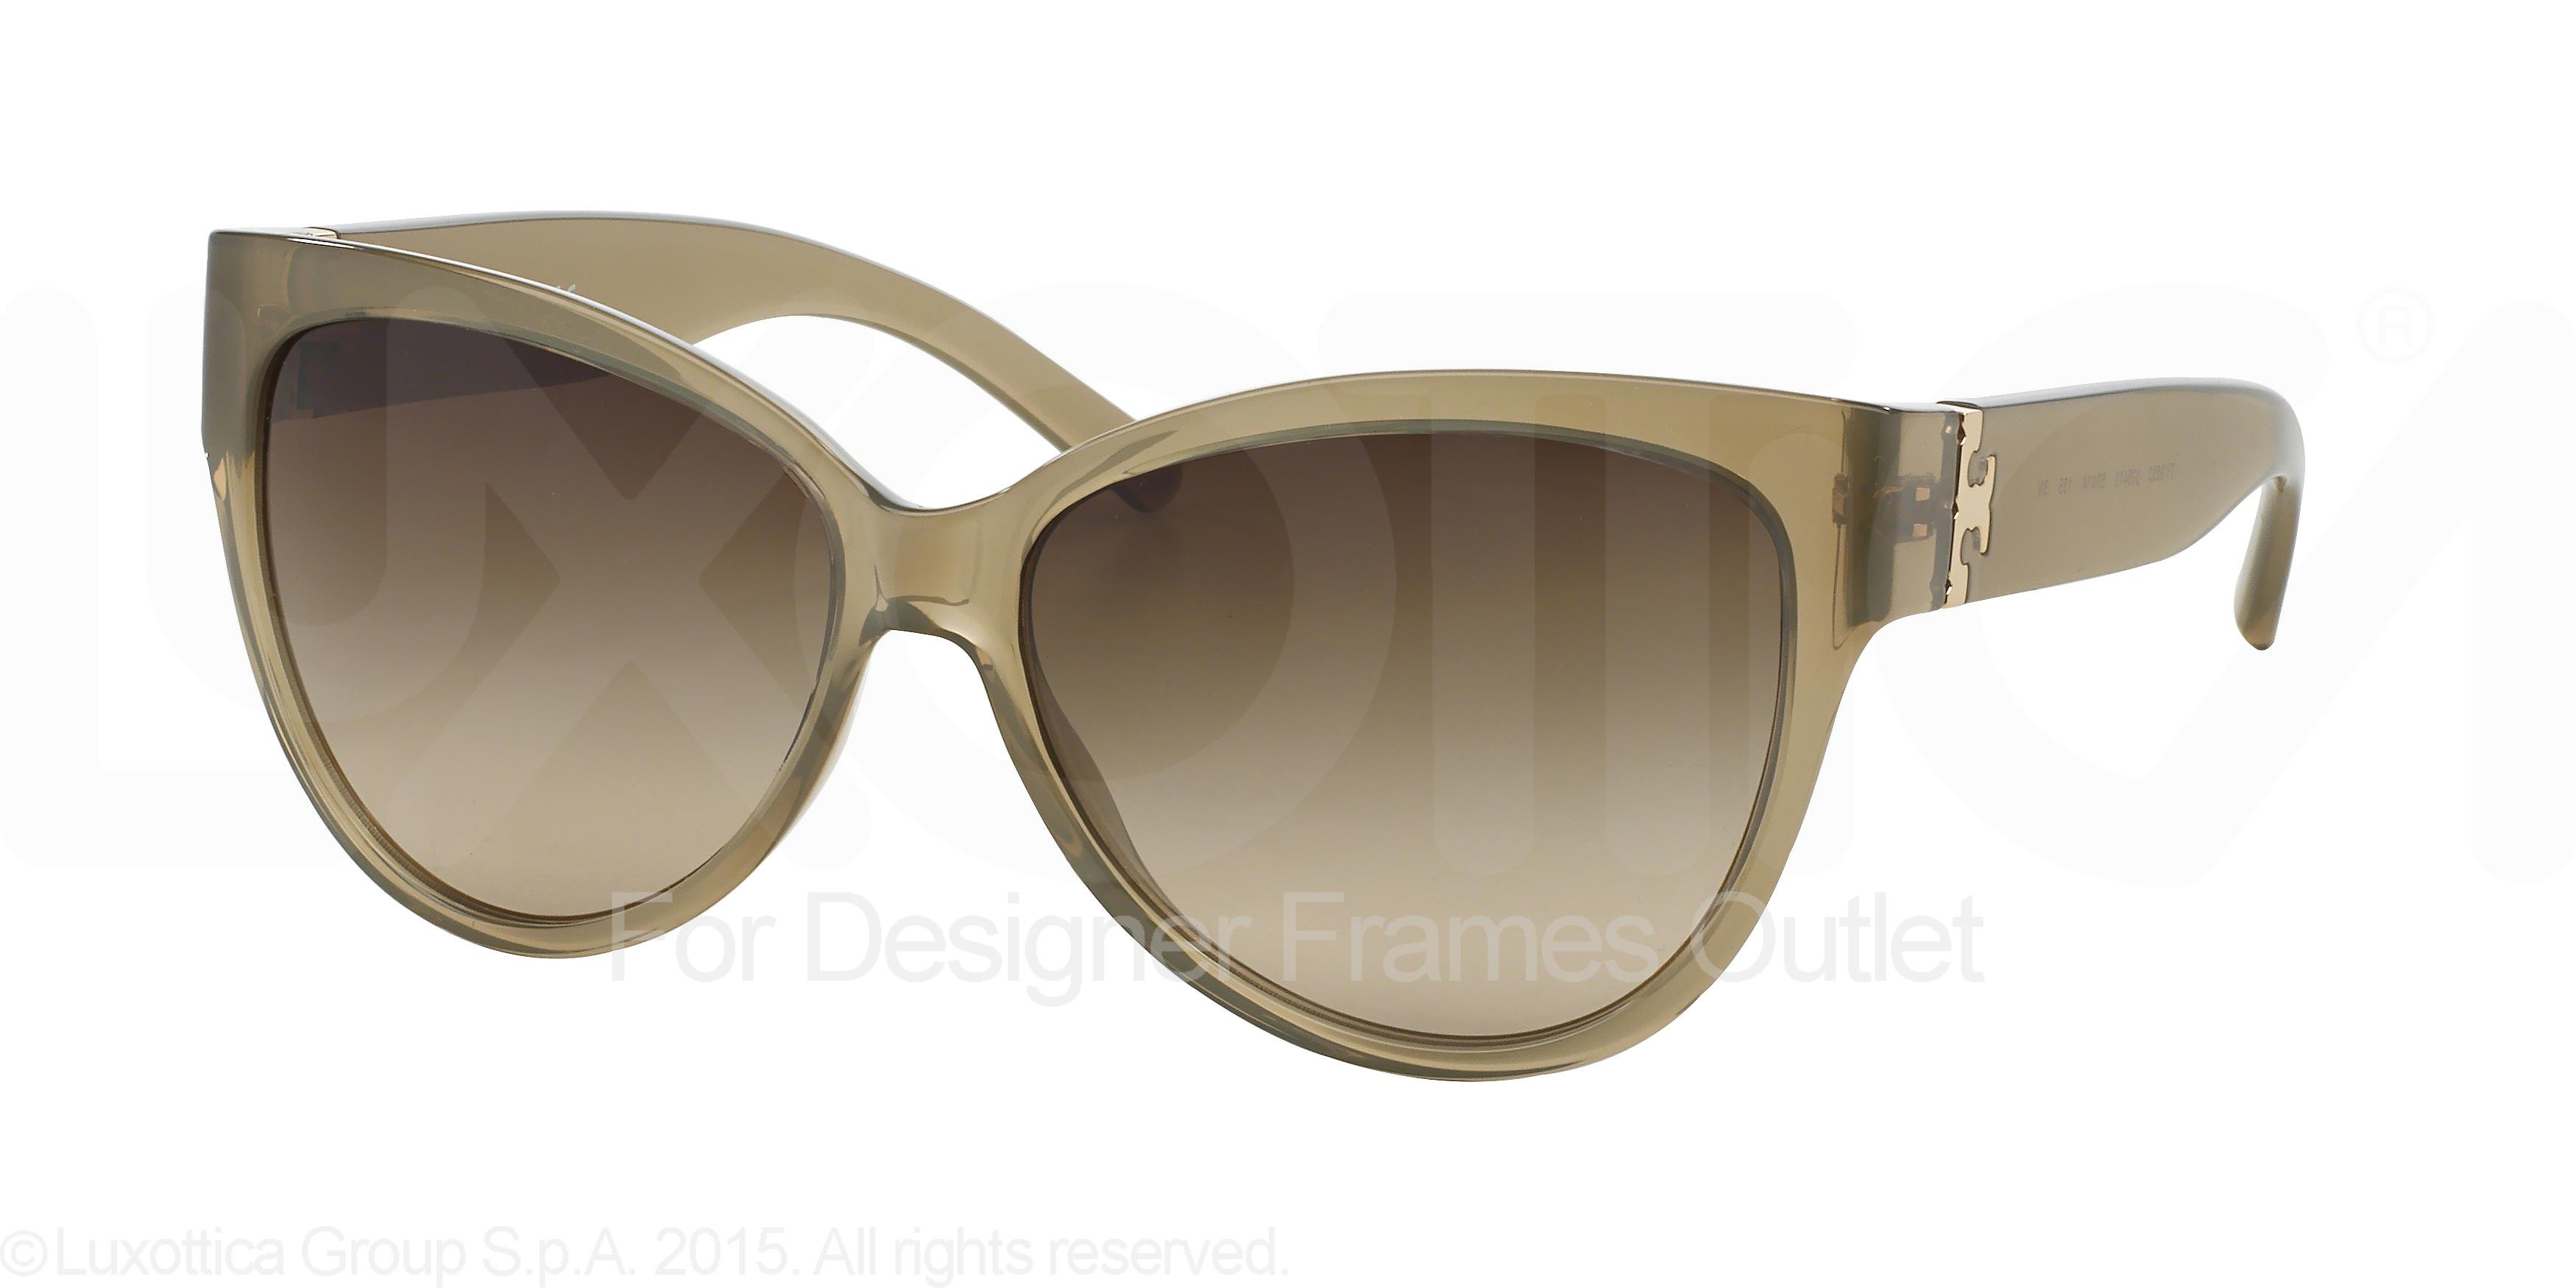 Designer Frames Outlet. Tory Burch Sunglasses TY9033